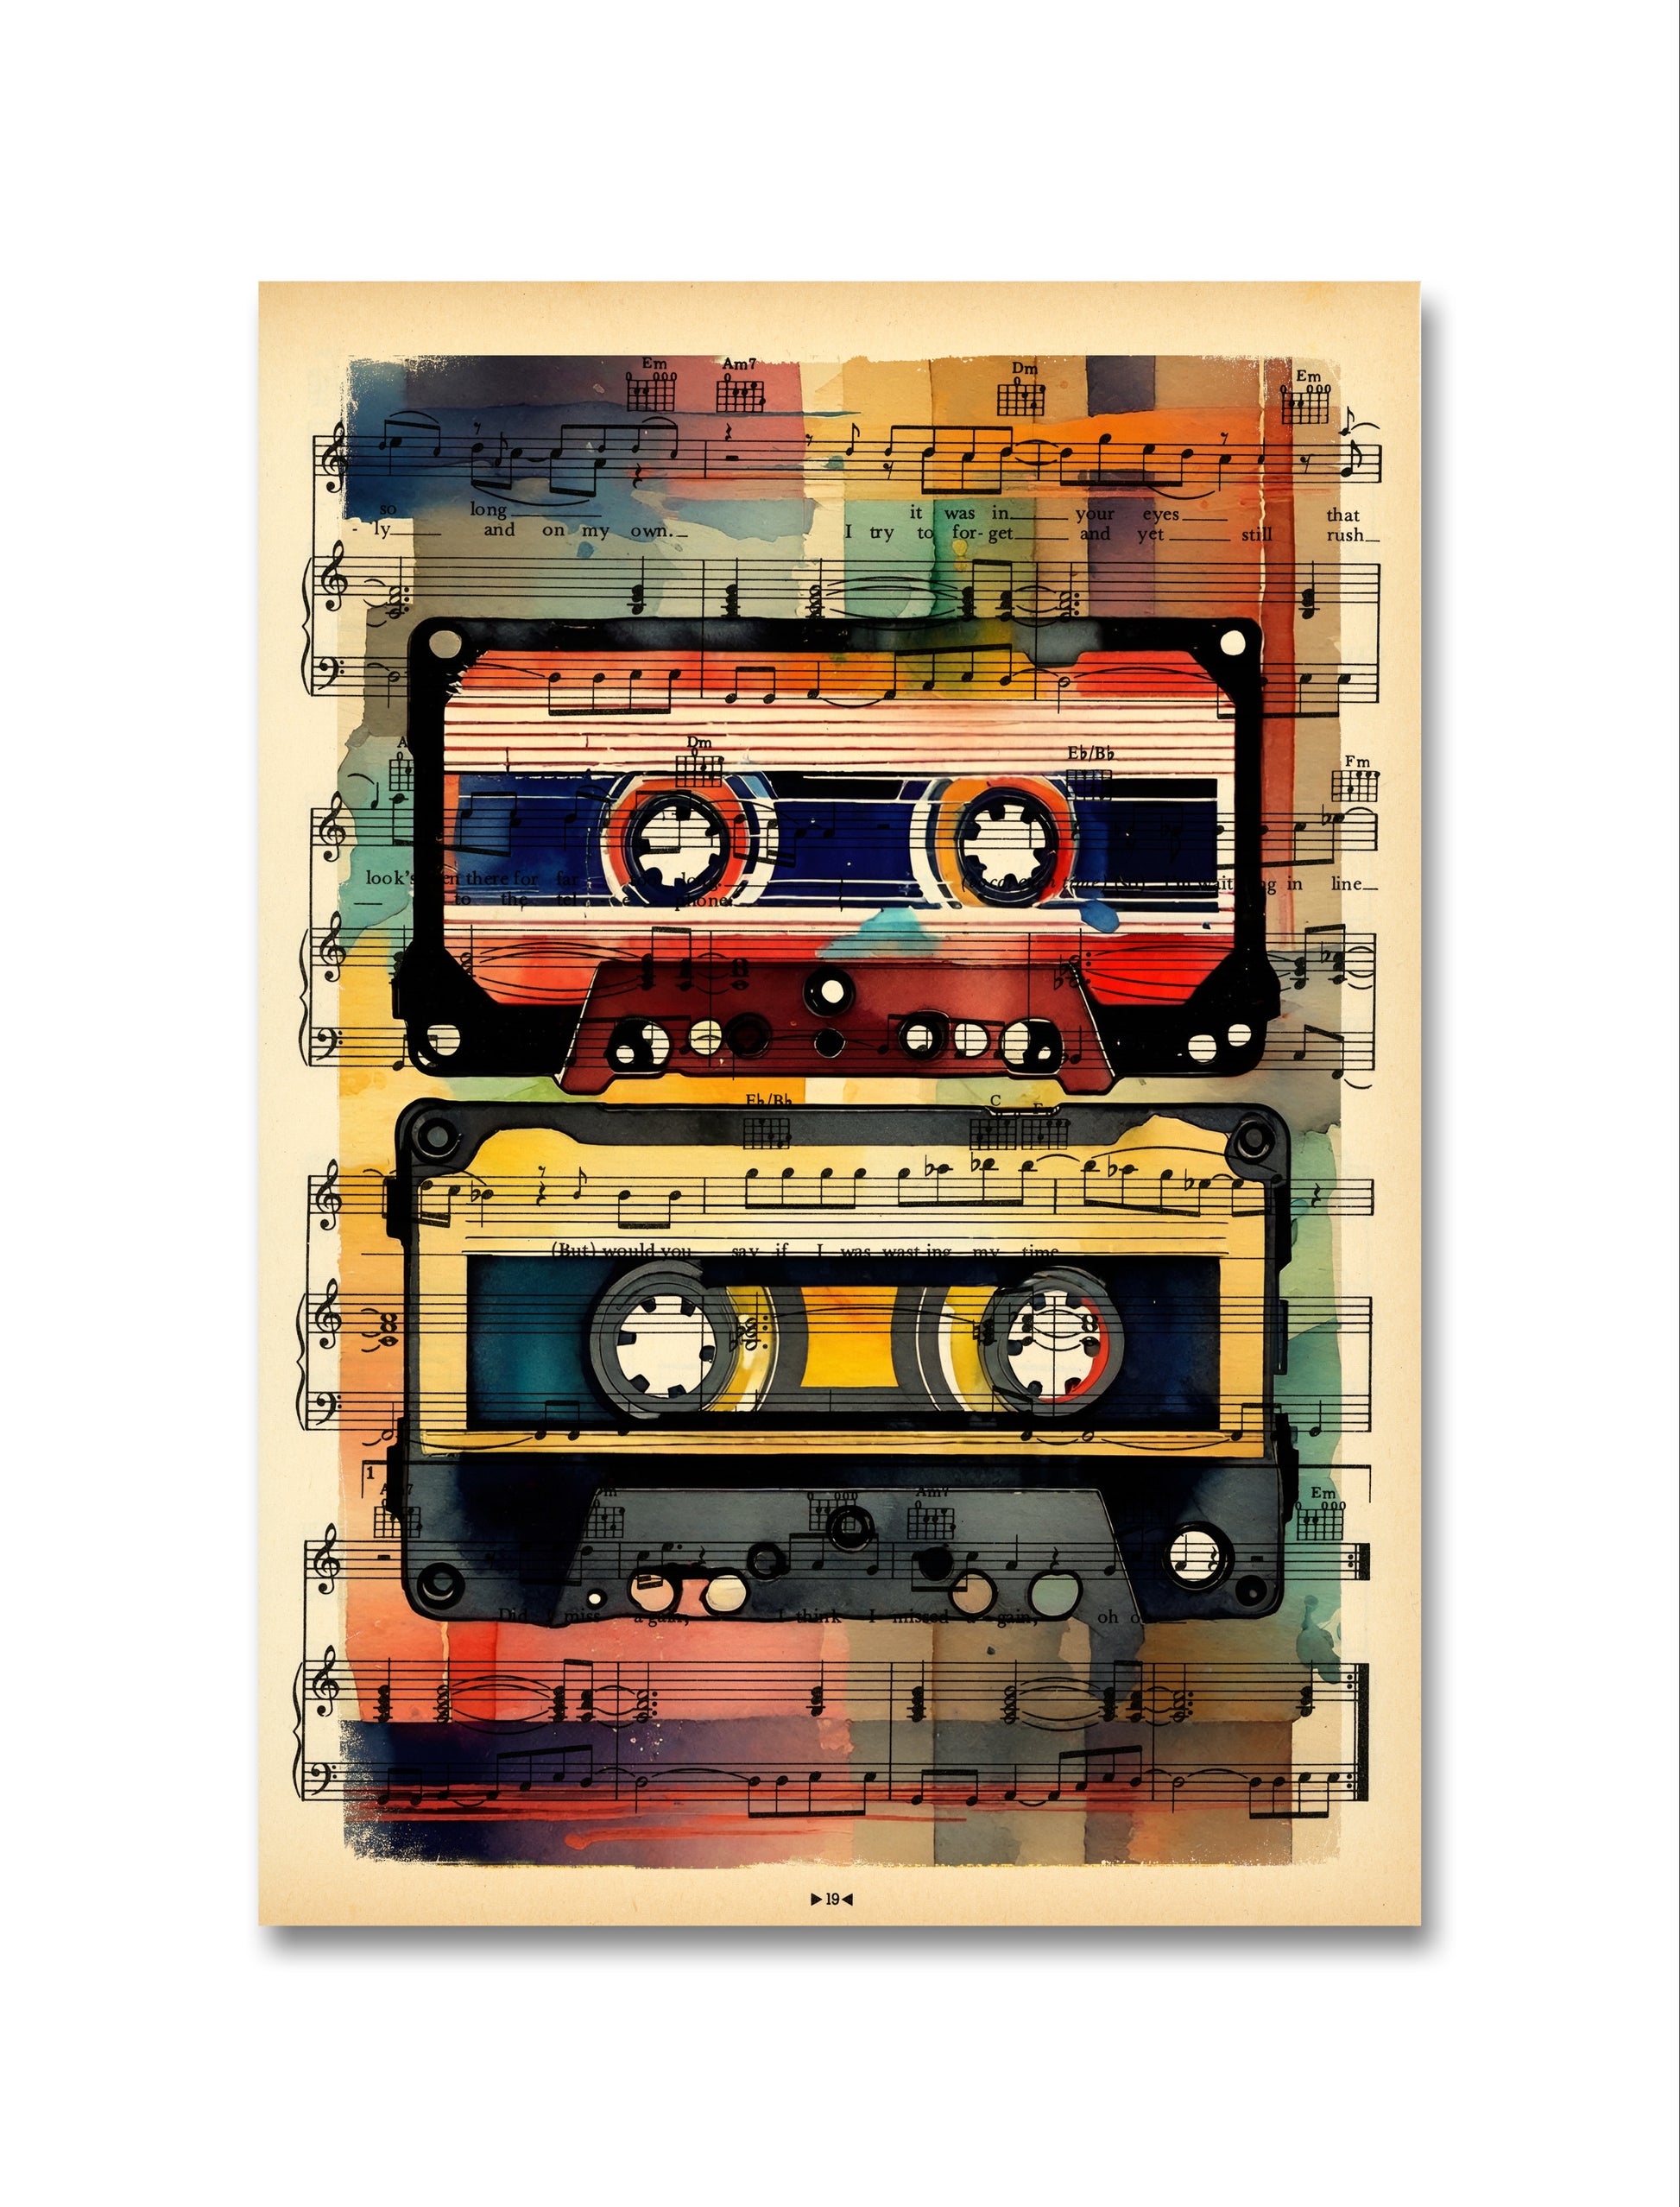 HiFi Retro Audio MixTape - Where visual art meets the timeless melodies of the 80s.